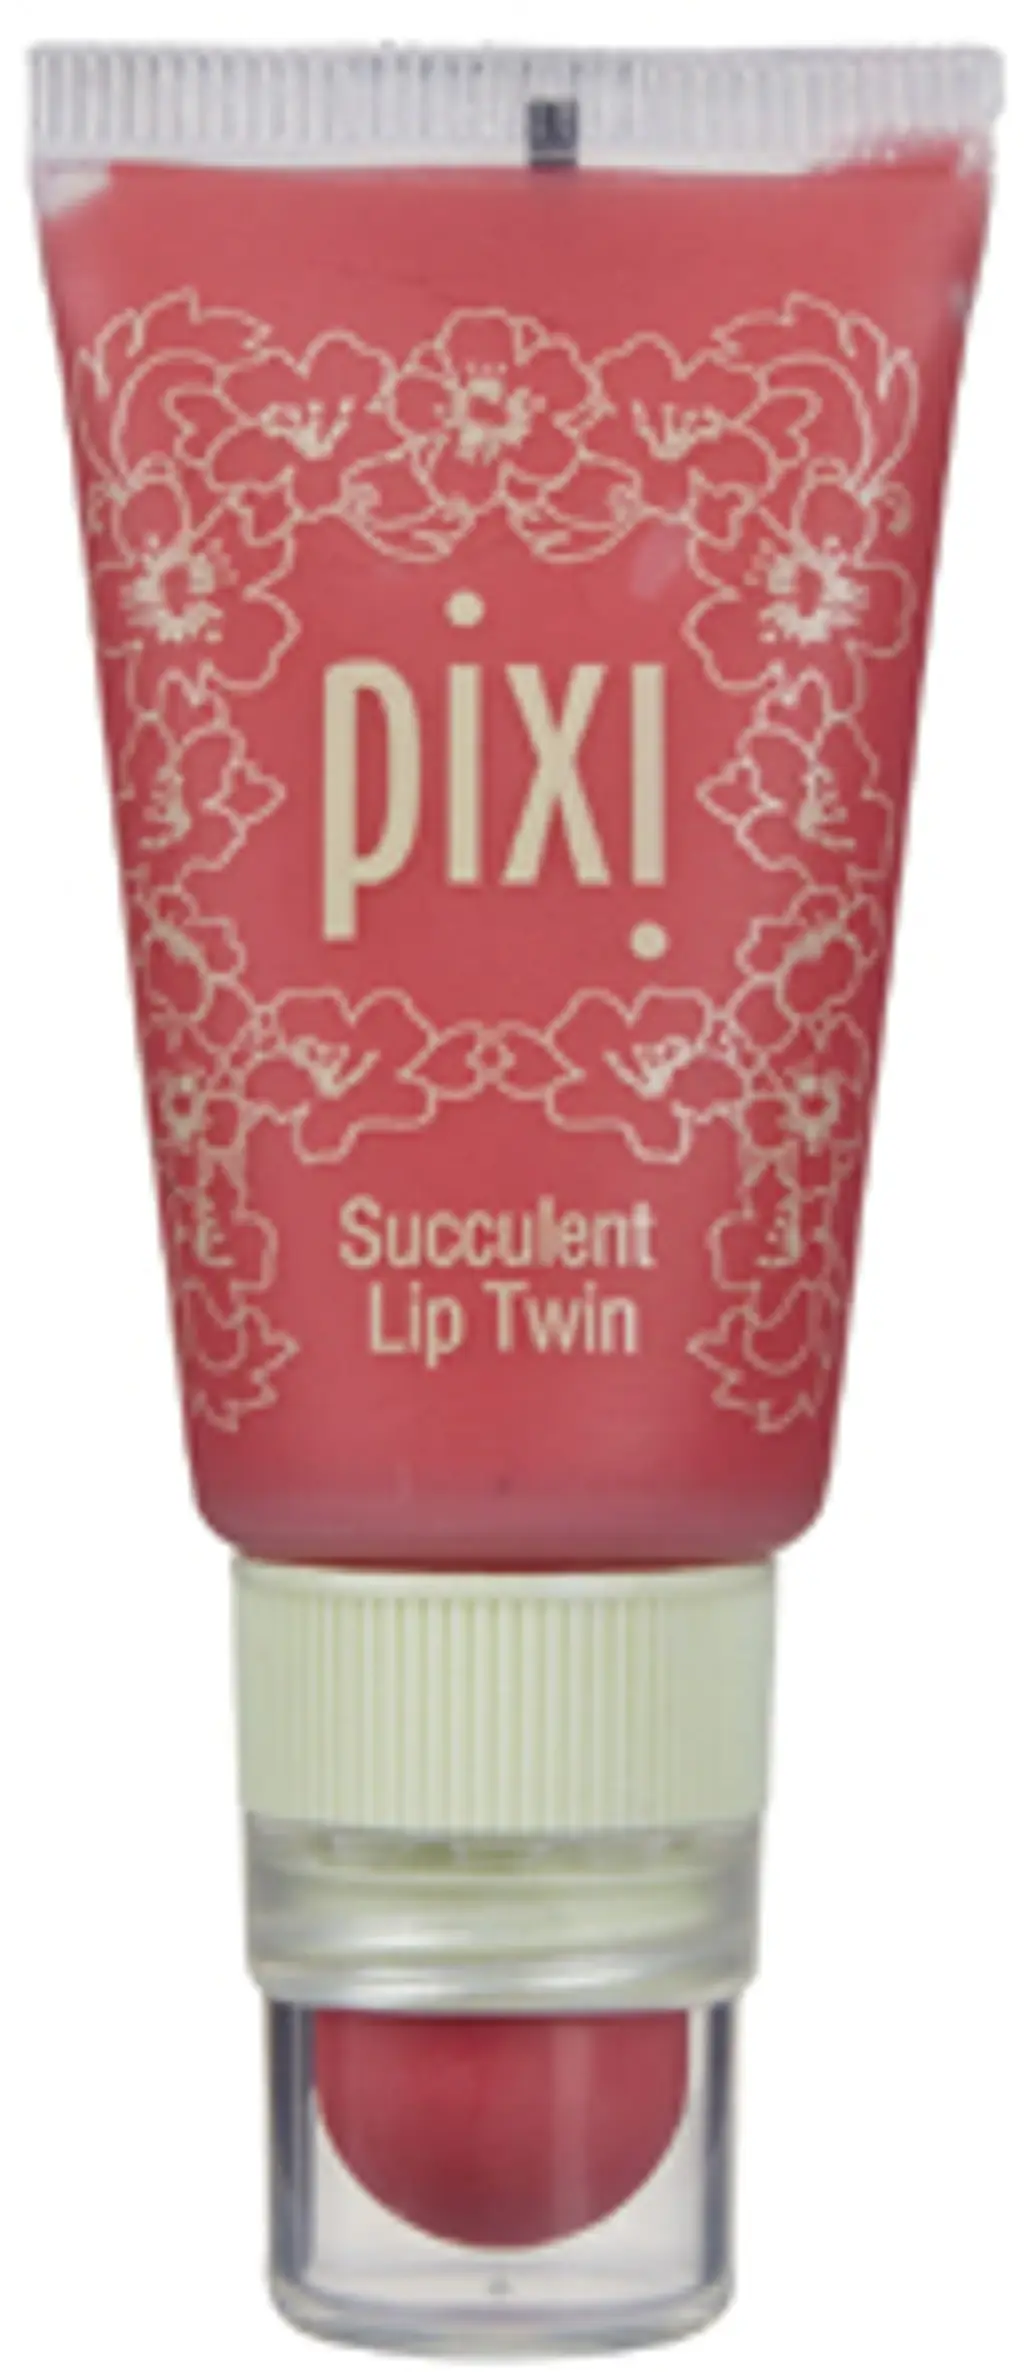 Pixi Succulent Lip Twin